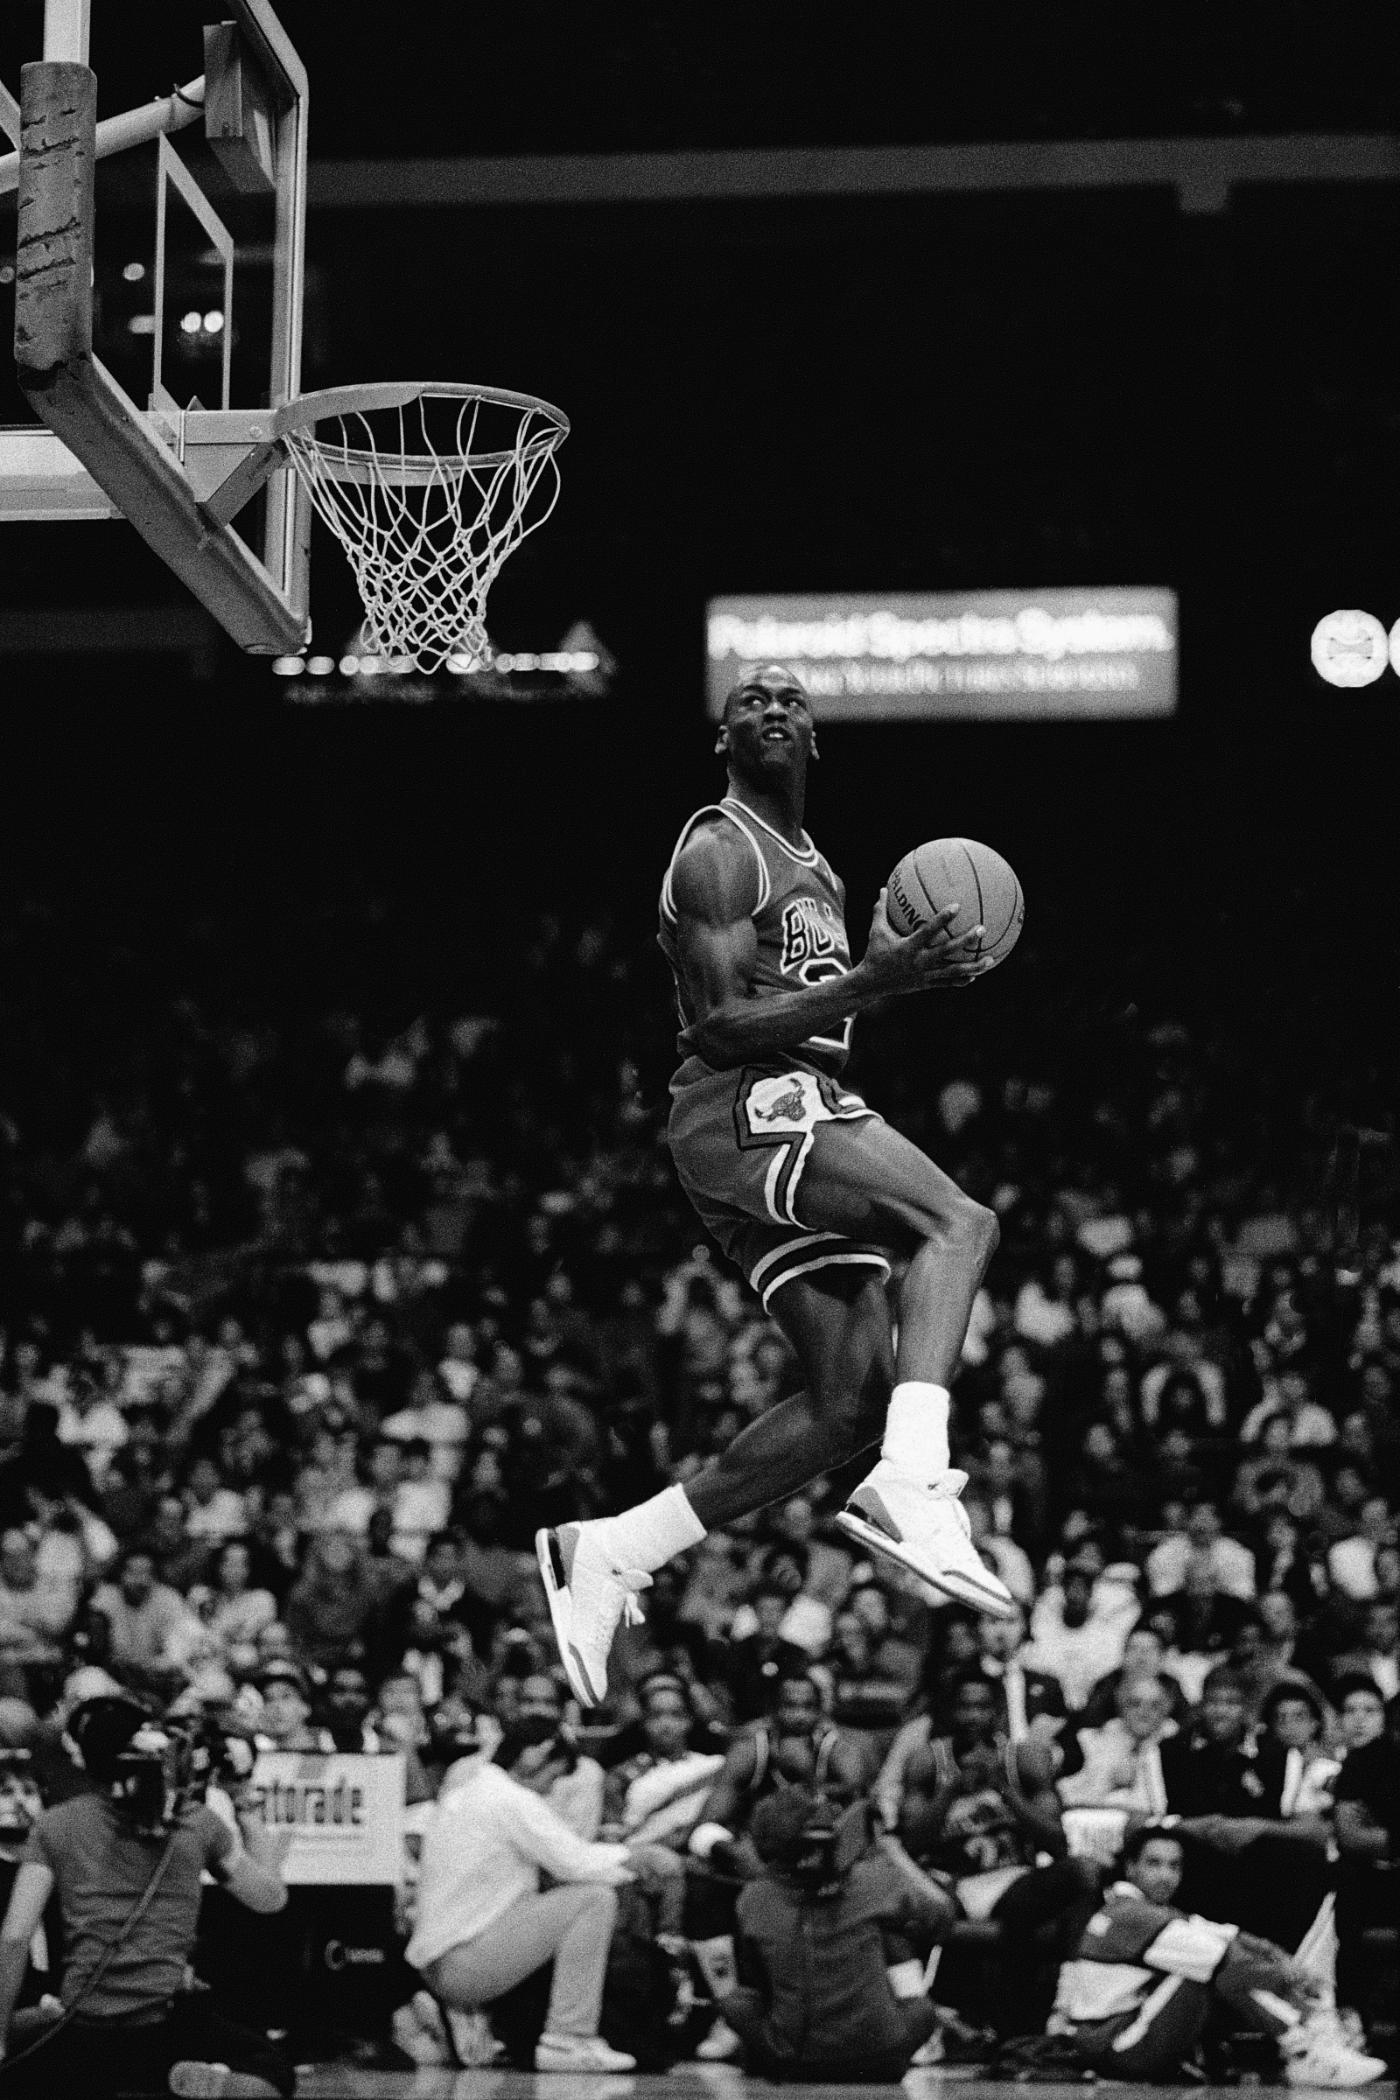 Michael Jordan Famous Foul Line Dunk Sports Poster Print 24 x 36 inches.